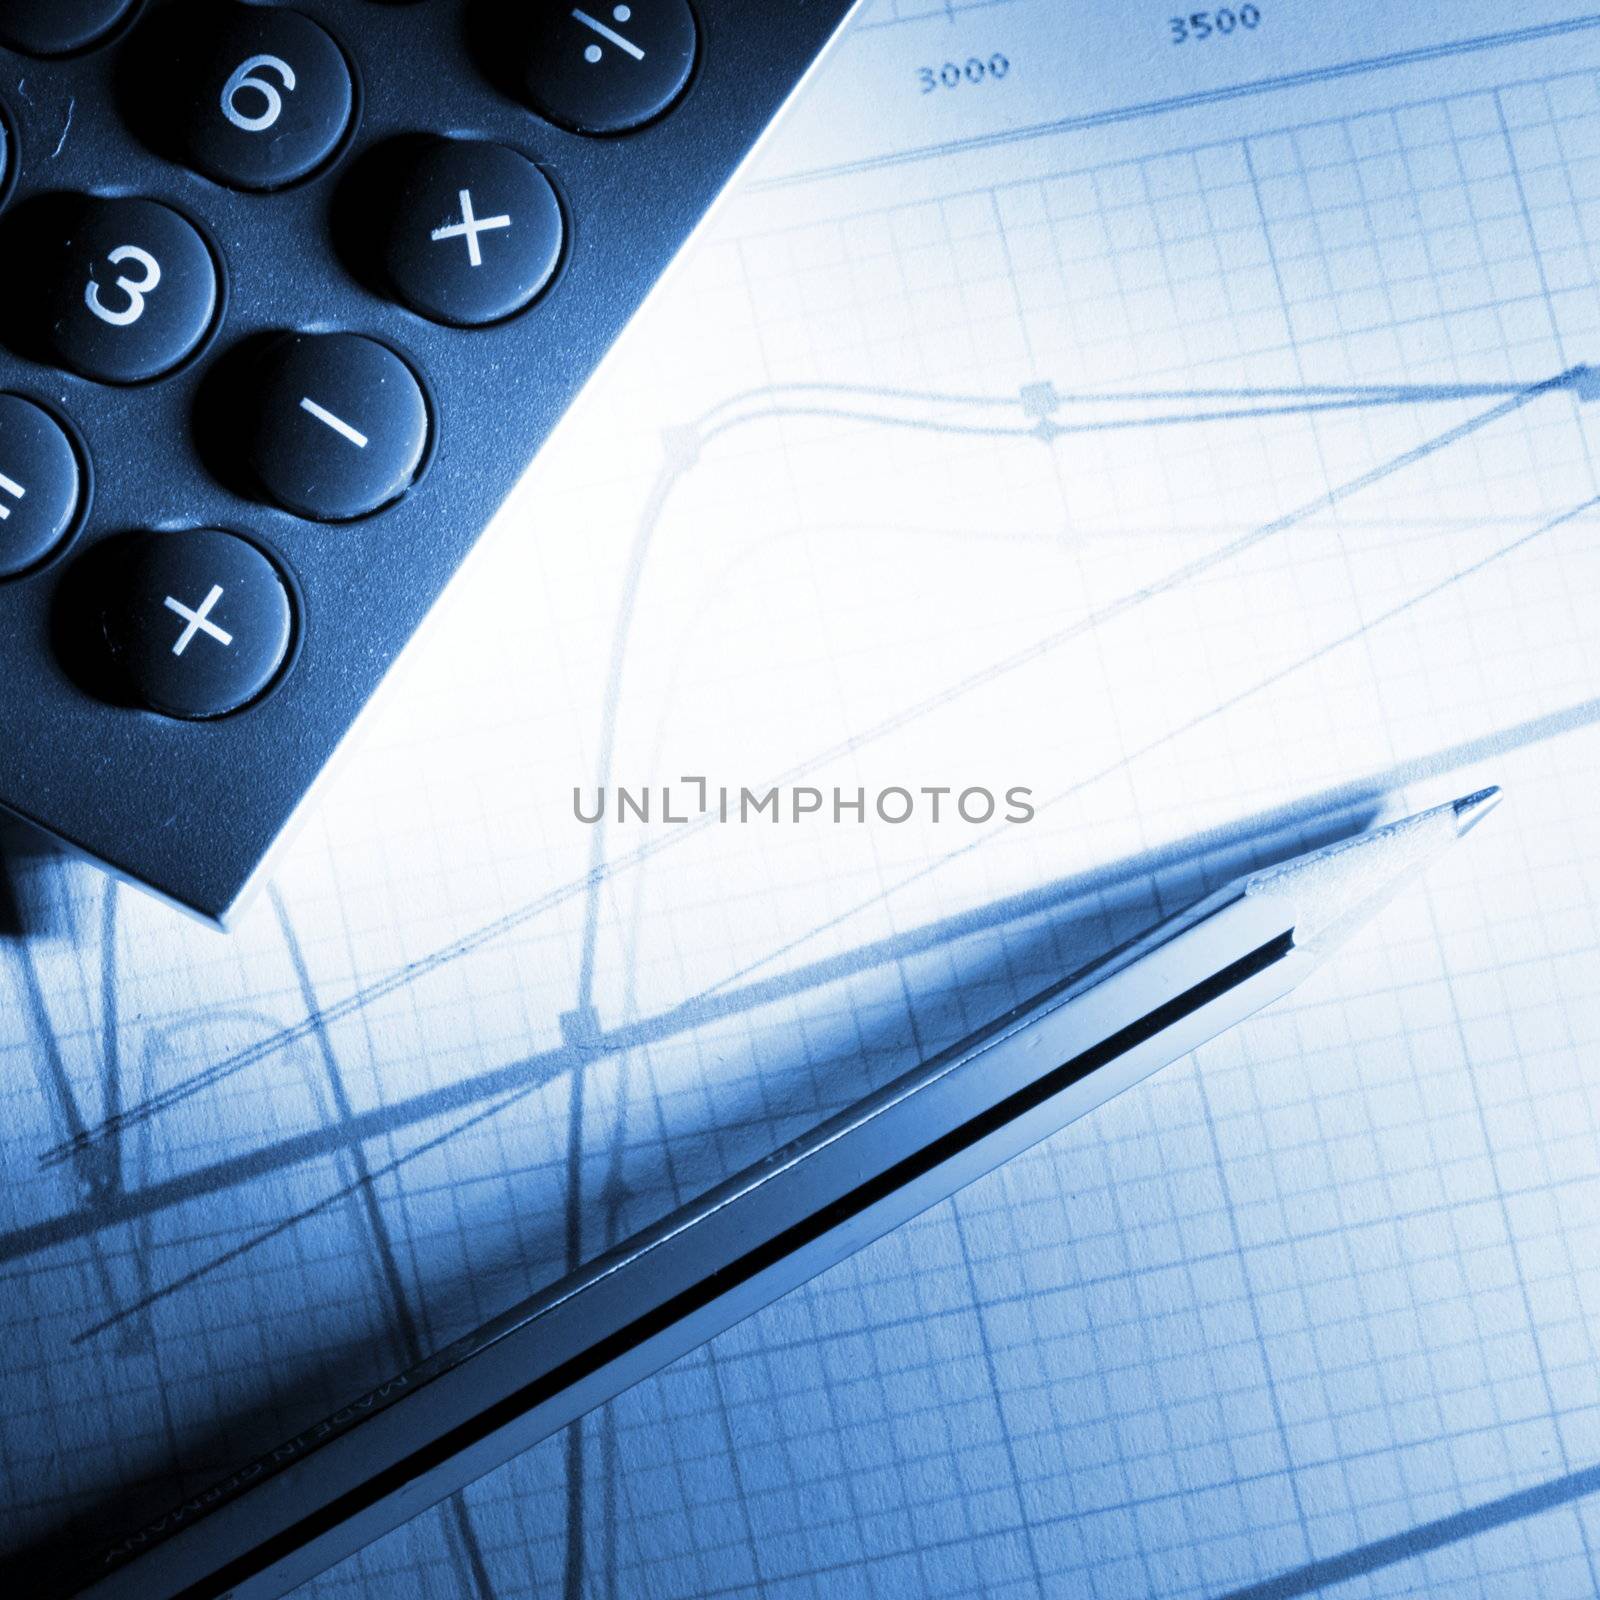 analysing financial data by gunnar3000